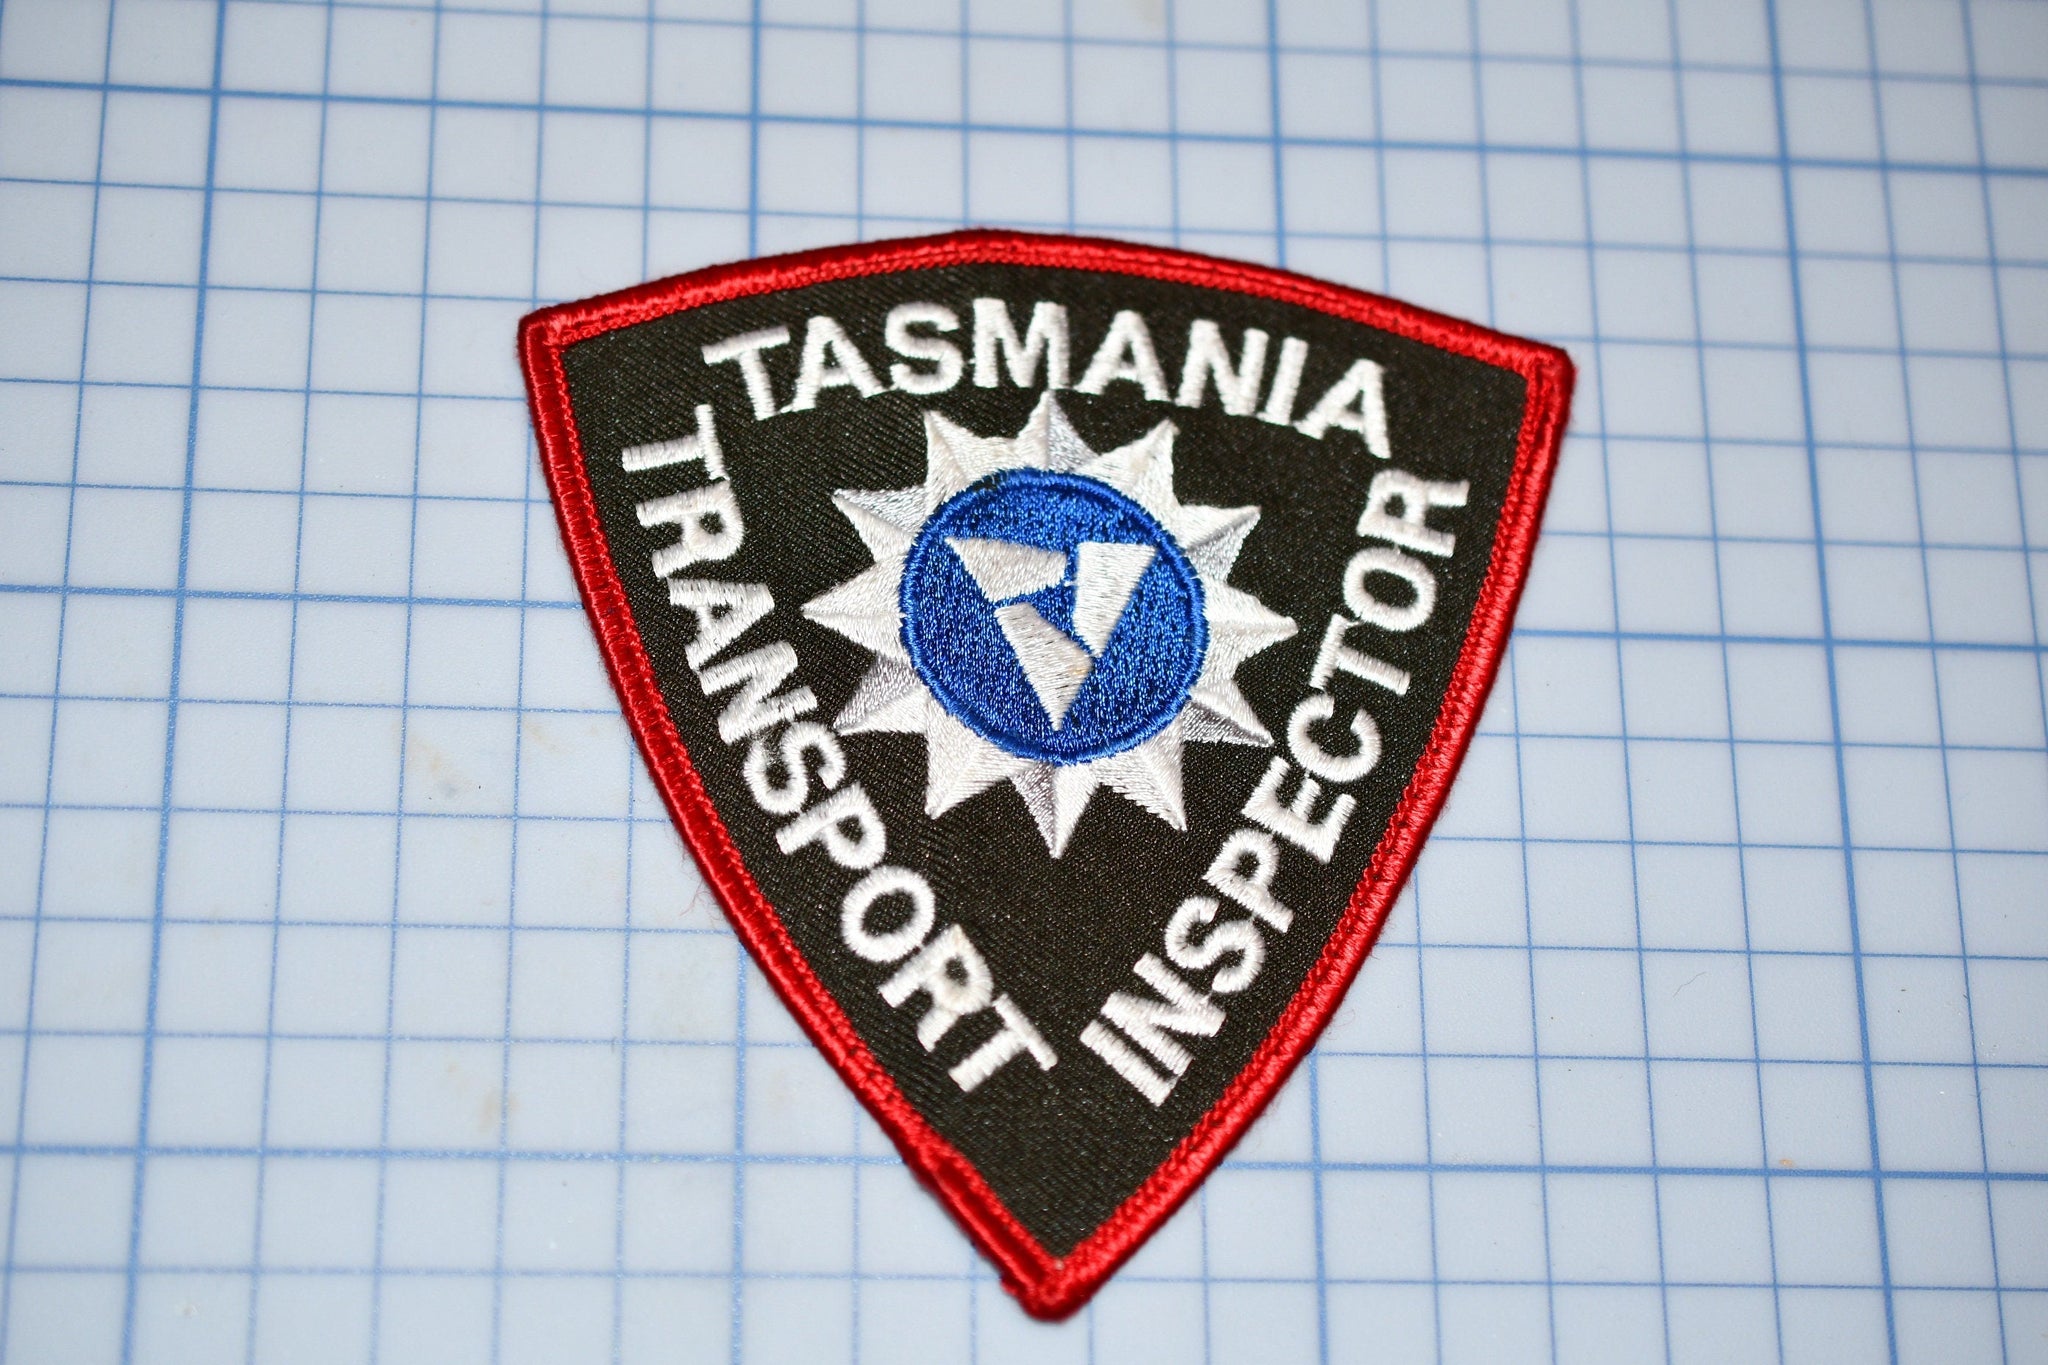 Tasmania Transport Inspector Patch (B26-303)